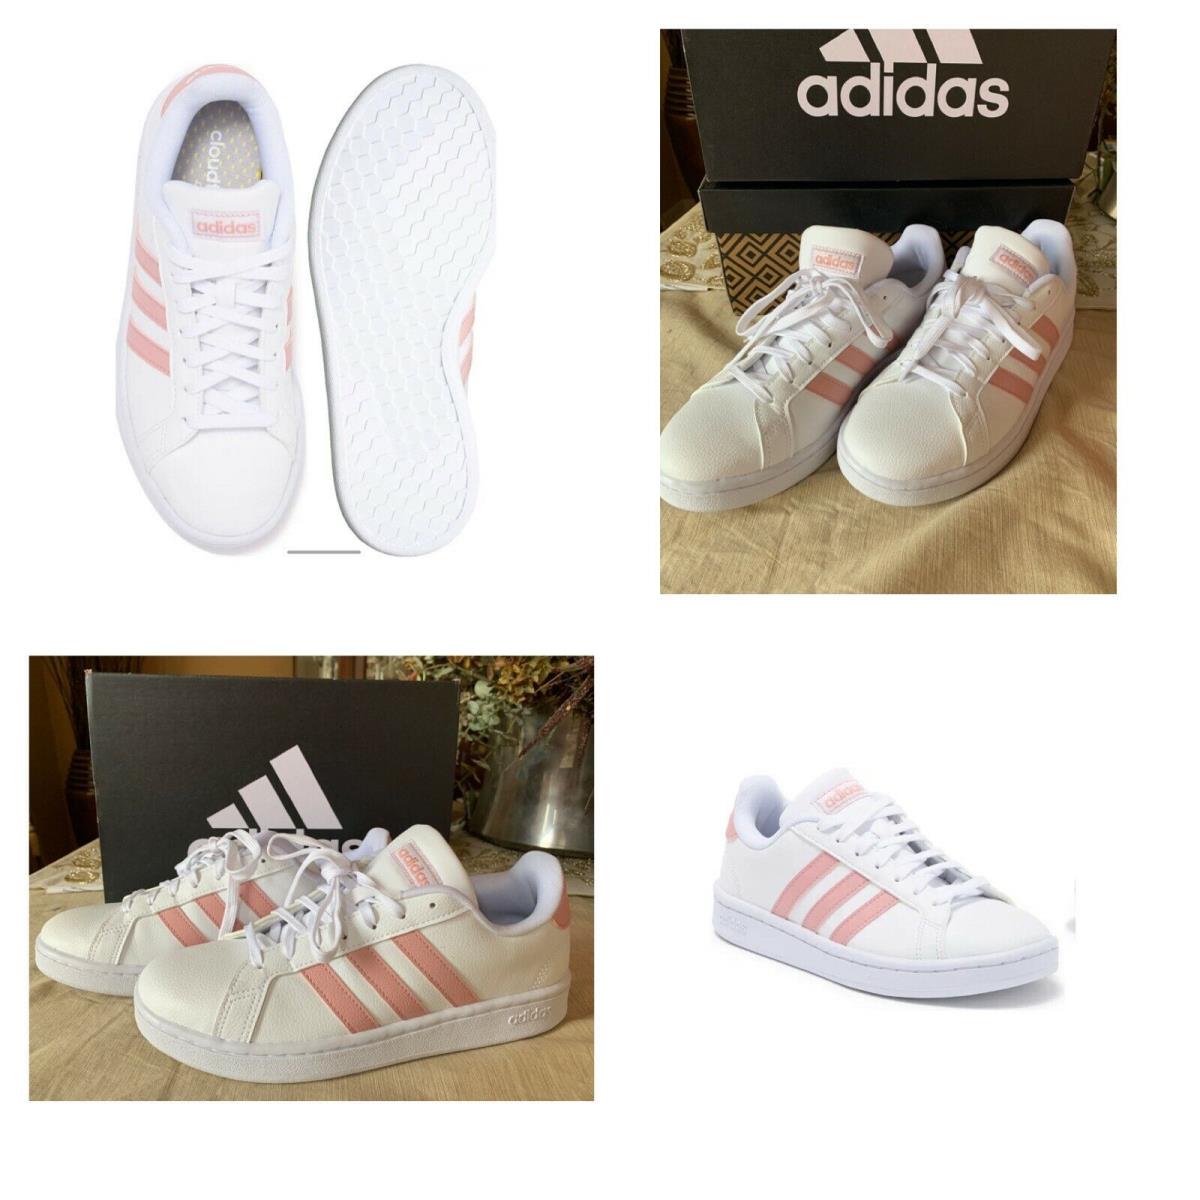 Adidas Grand Court Tennis Gym Shoe White with Mauve/pink Stripes GX8182 Box